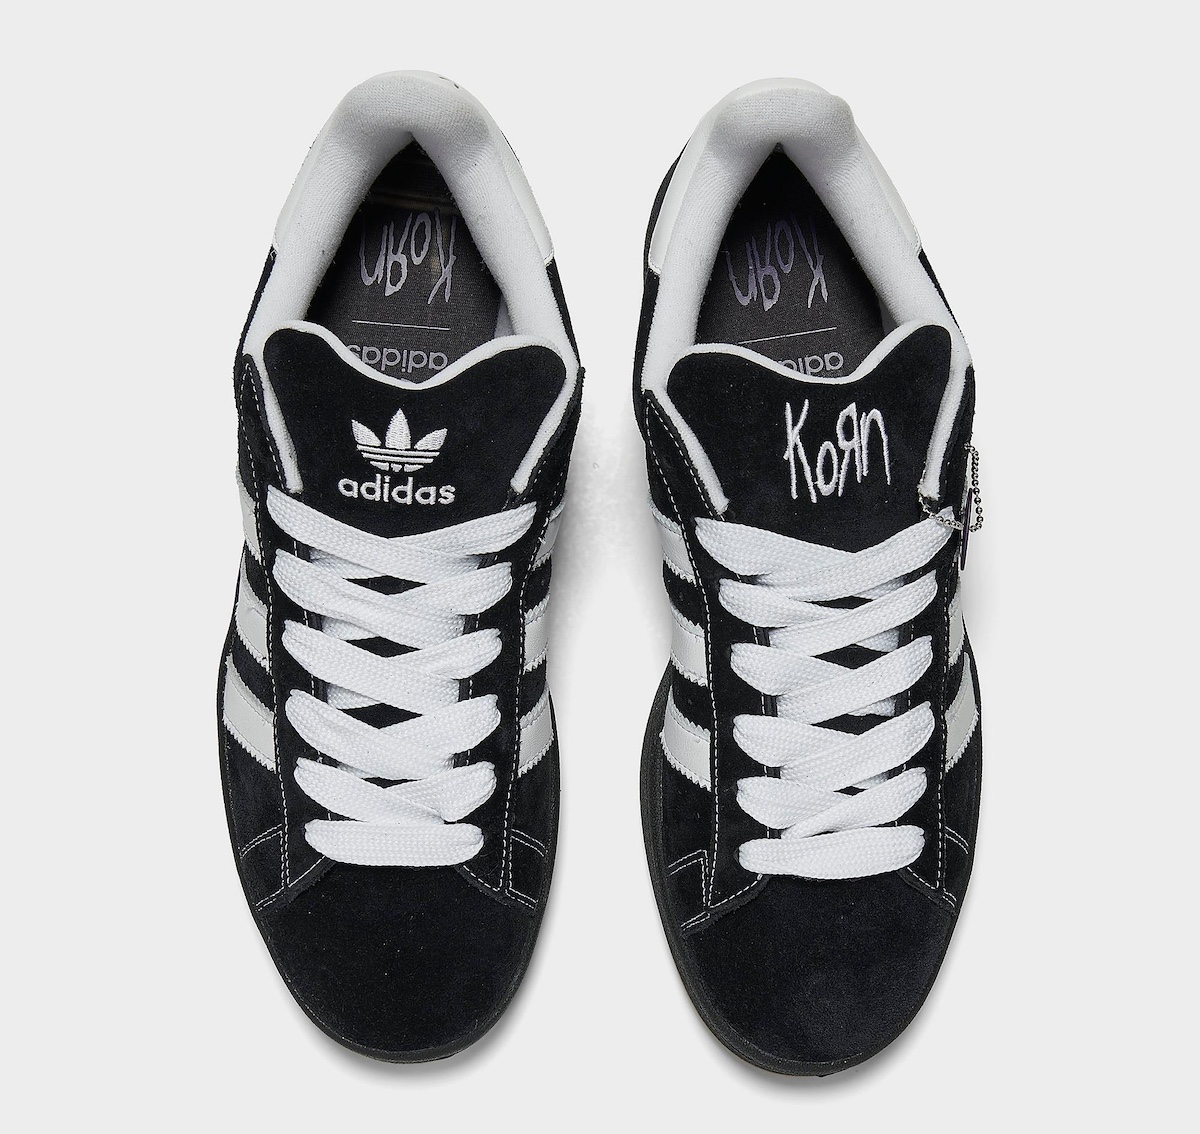 Korn adidas Campus 00s IG0792 Release Date 5